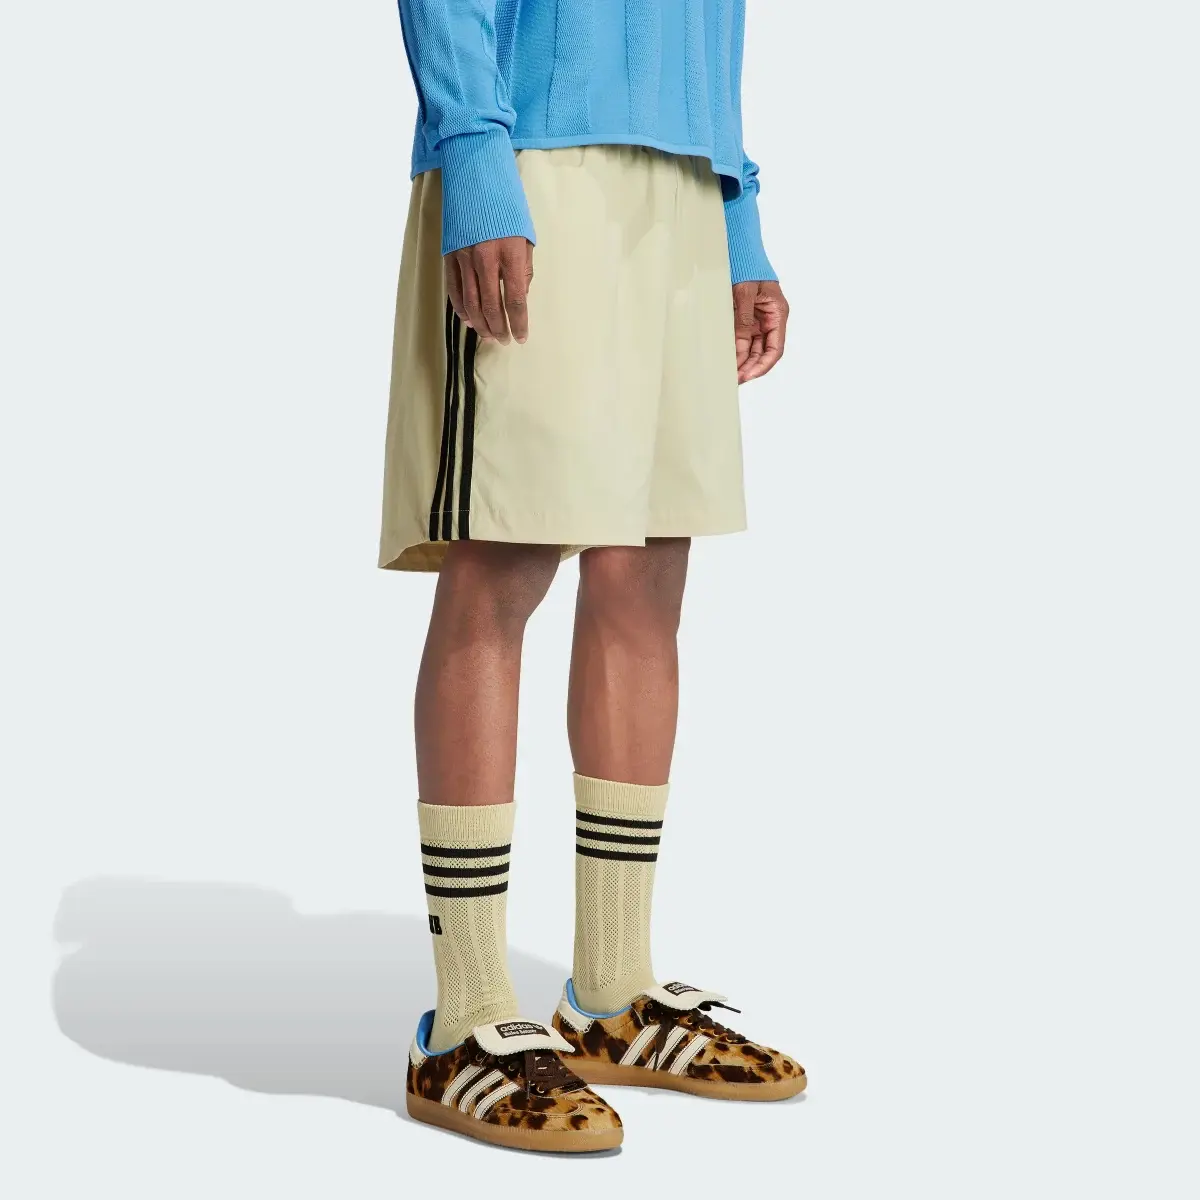 Adidas Statement Football Shorts. 3